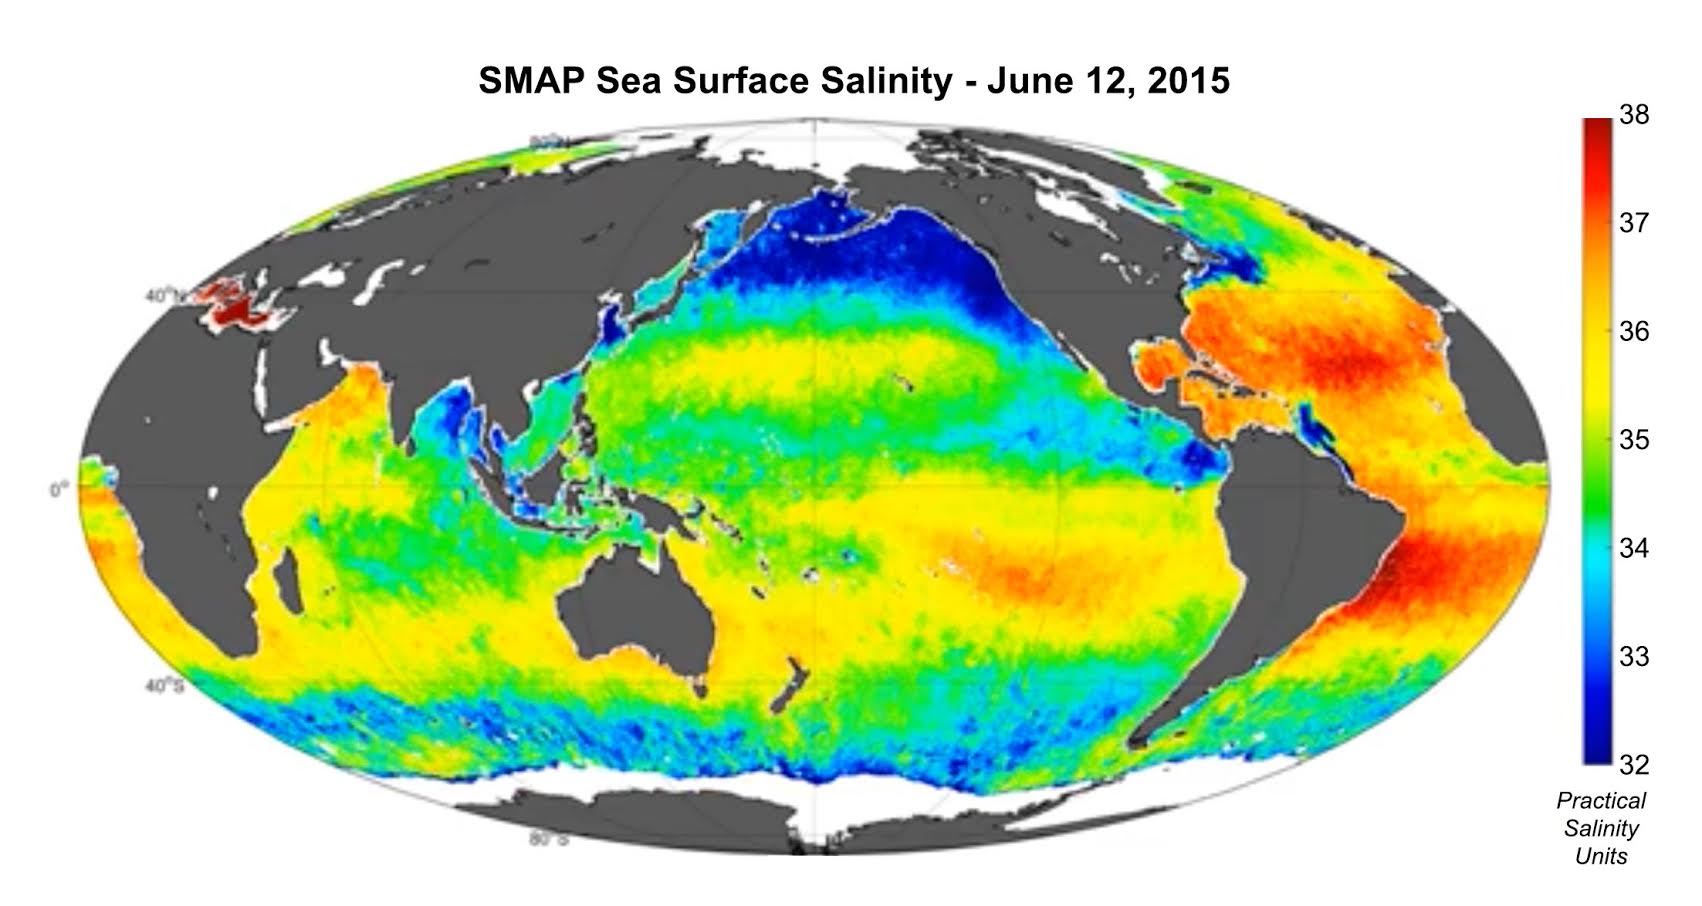 SMAP sea surface salinity data